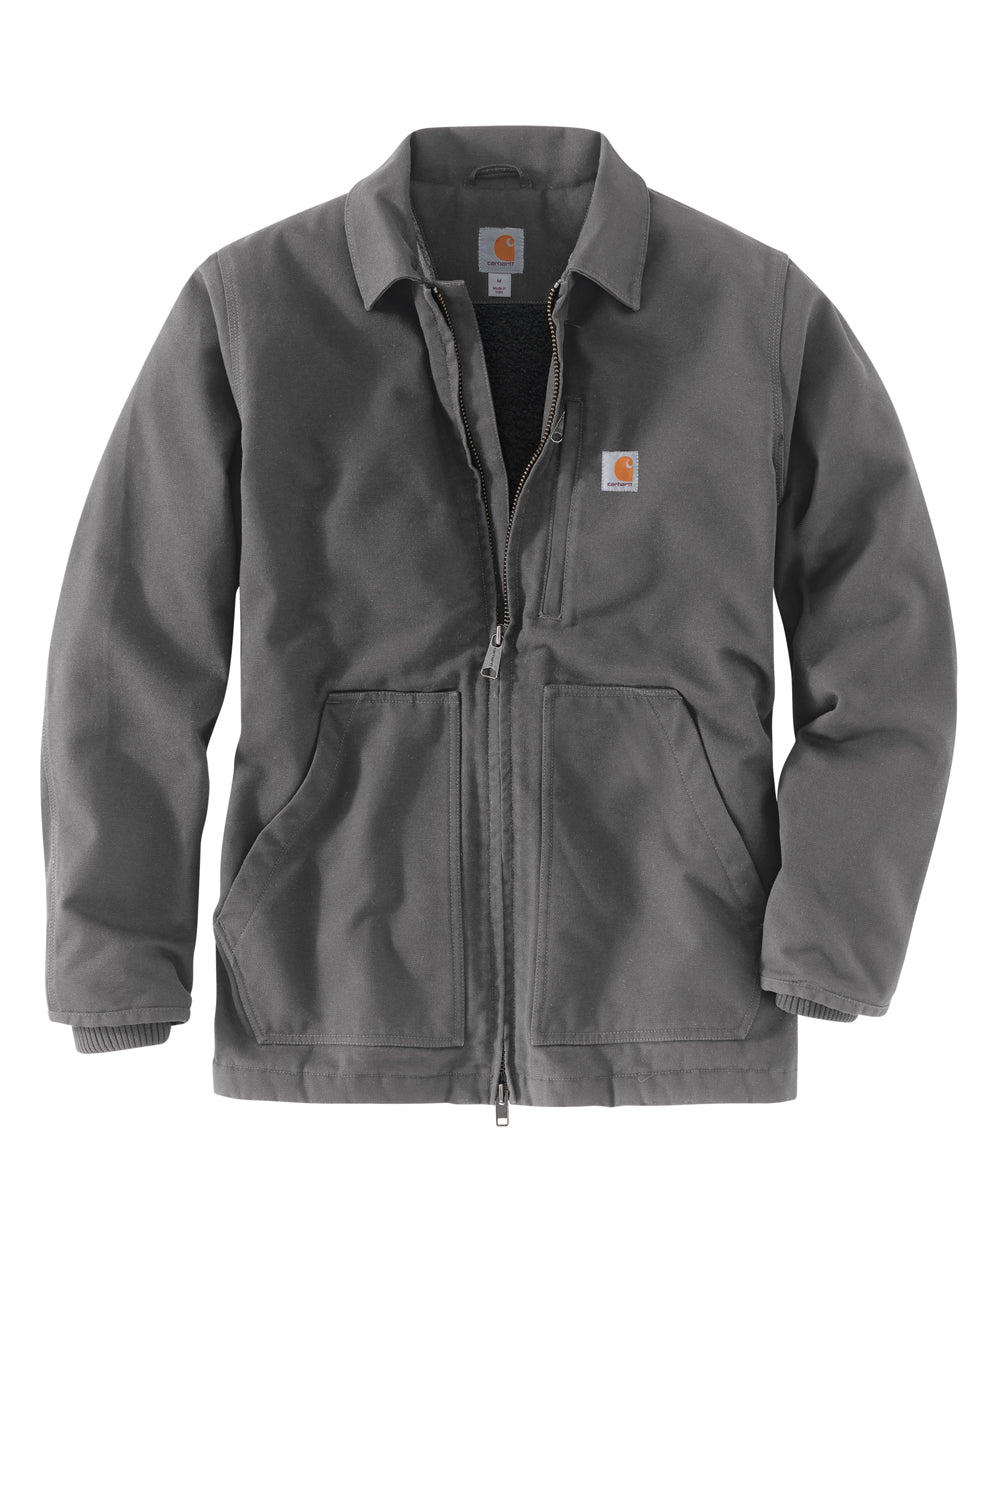 Carhartt CT104293/CTT104293 Mens Sherpa Lined Full Zip Jacket Gravel Grey Flat Front